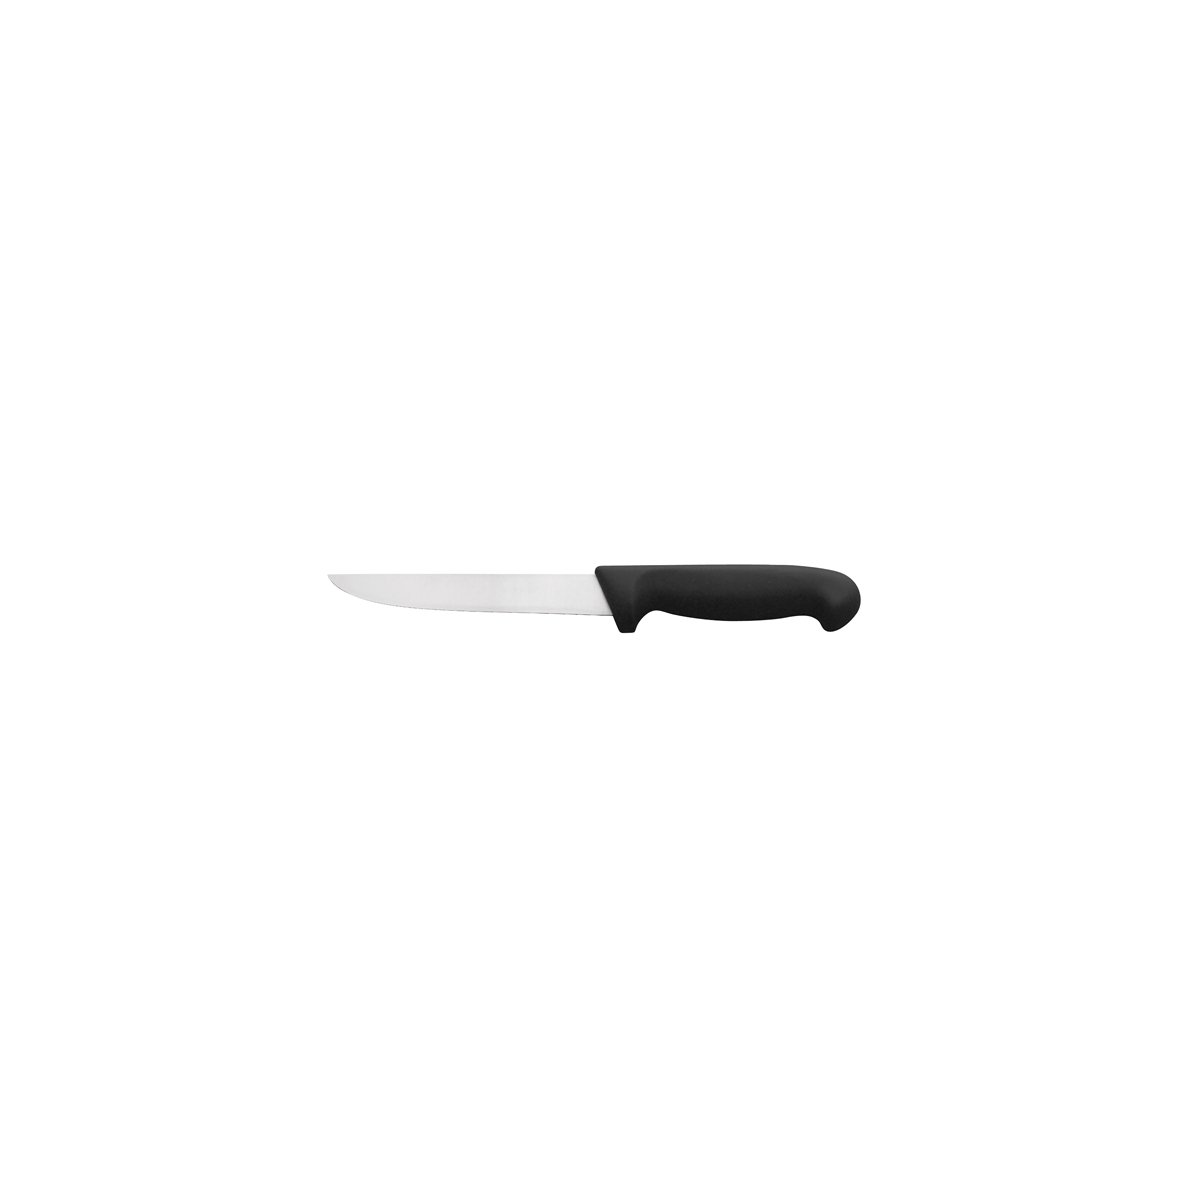 25008 Ivo Professional 55000 Boning Knife 150mm Tomkin Australia Hospitality Supplies